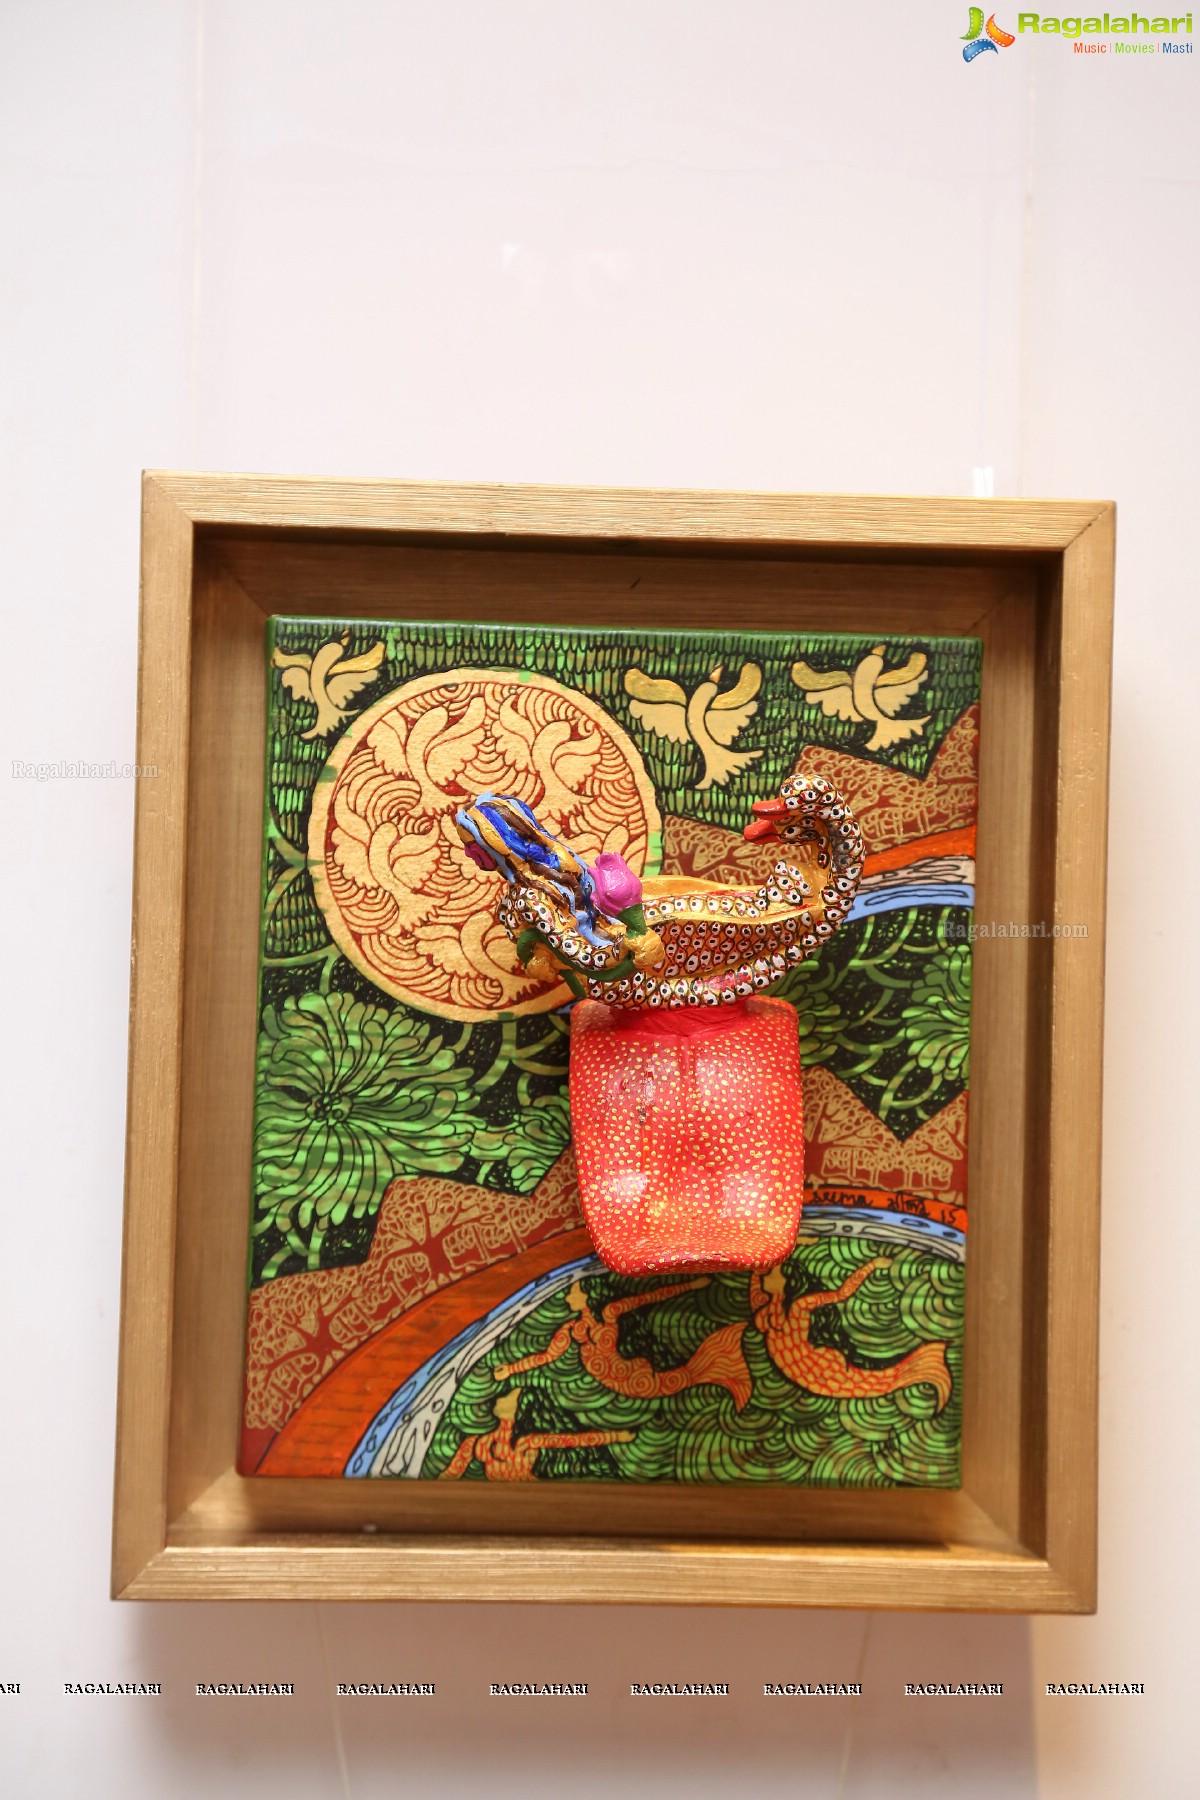 Golden Womb Dawn of Time by Seema Kohli at Kalakriti Art Gallery